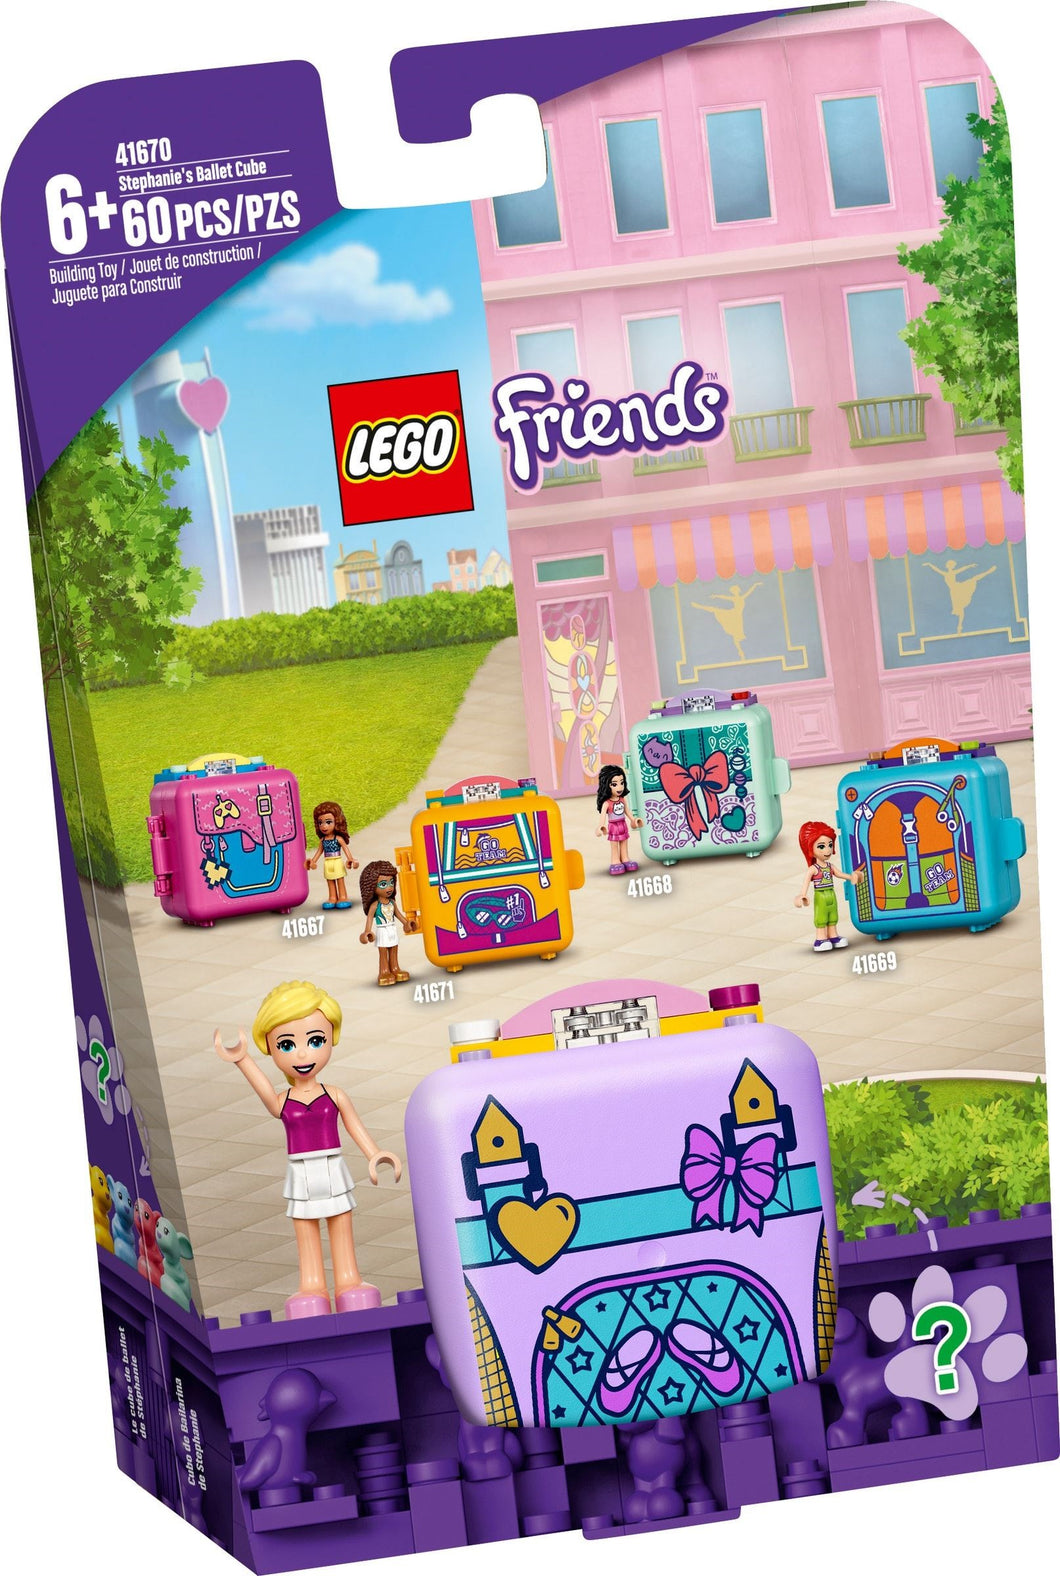 LEGO® Friends 41670 Stephanie's Ballet Cube (60 pieces)